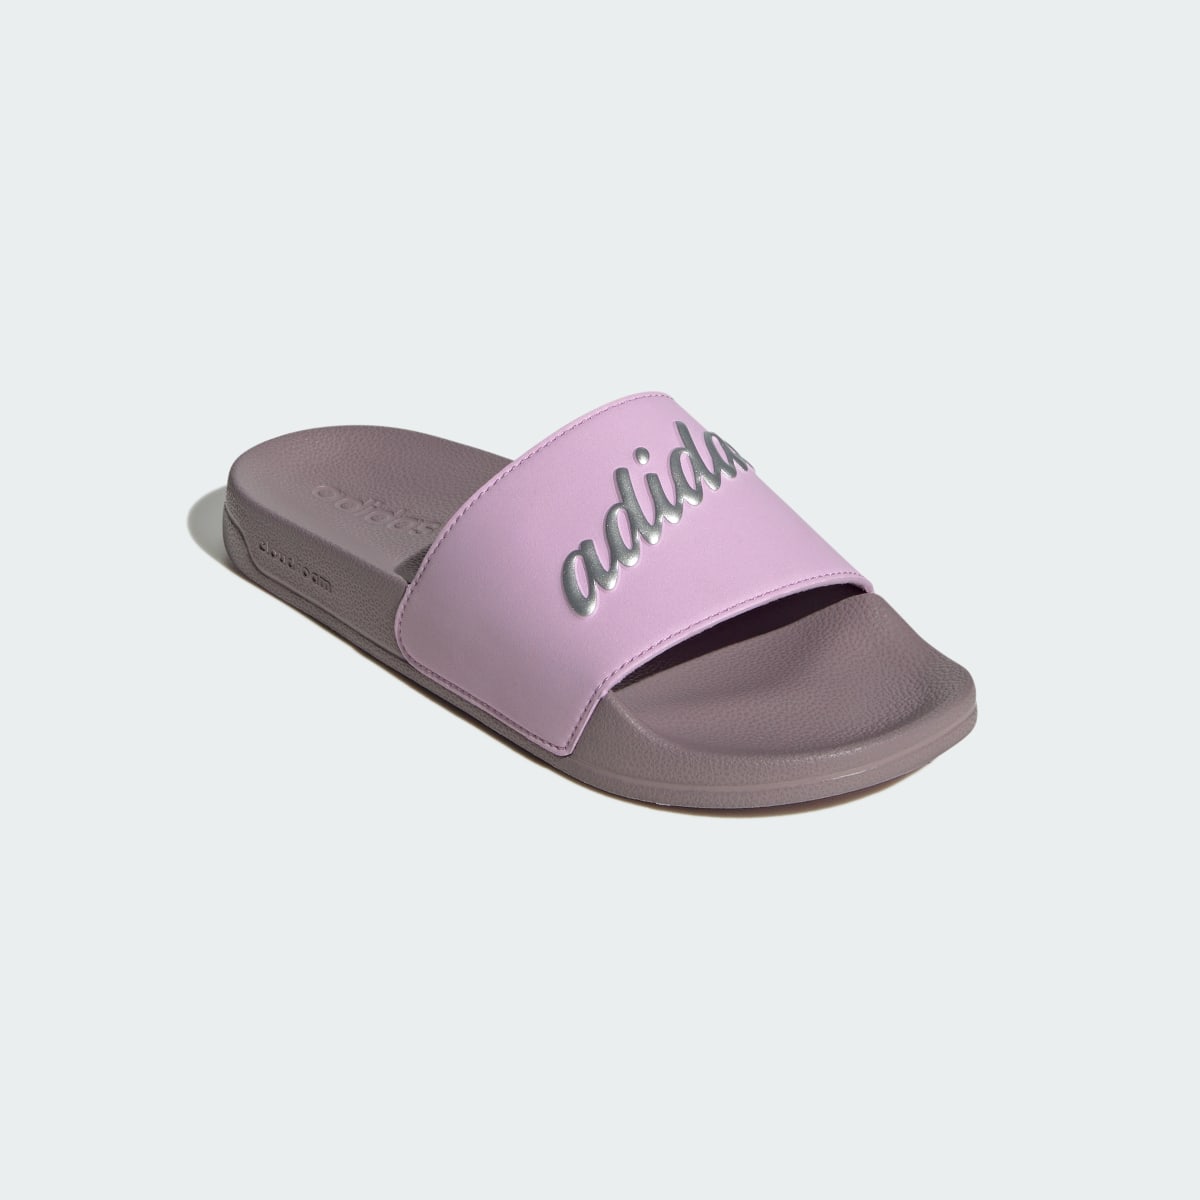 Adidas Adilette Shower Slides. 5